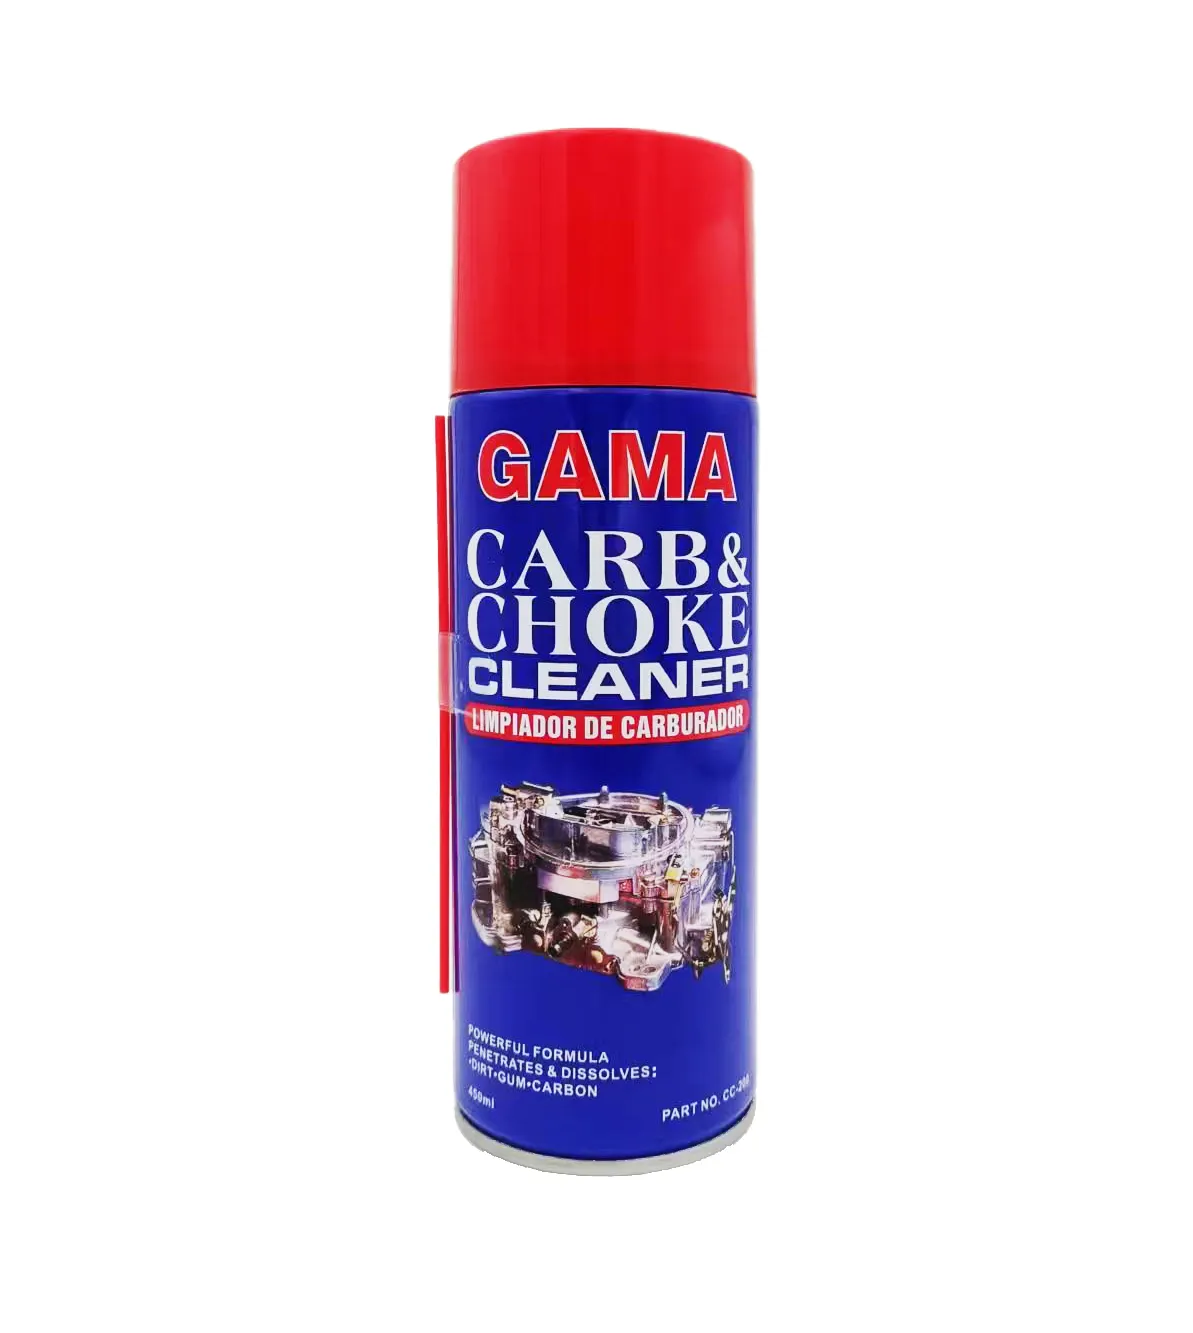 GAMA Carb & Choke Cleaner LIMPIADOR DE CARBURADOR 450mL/250ml